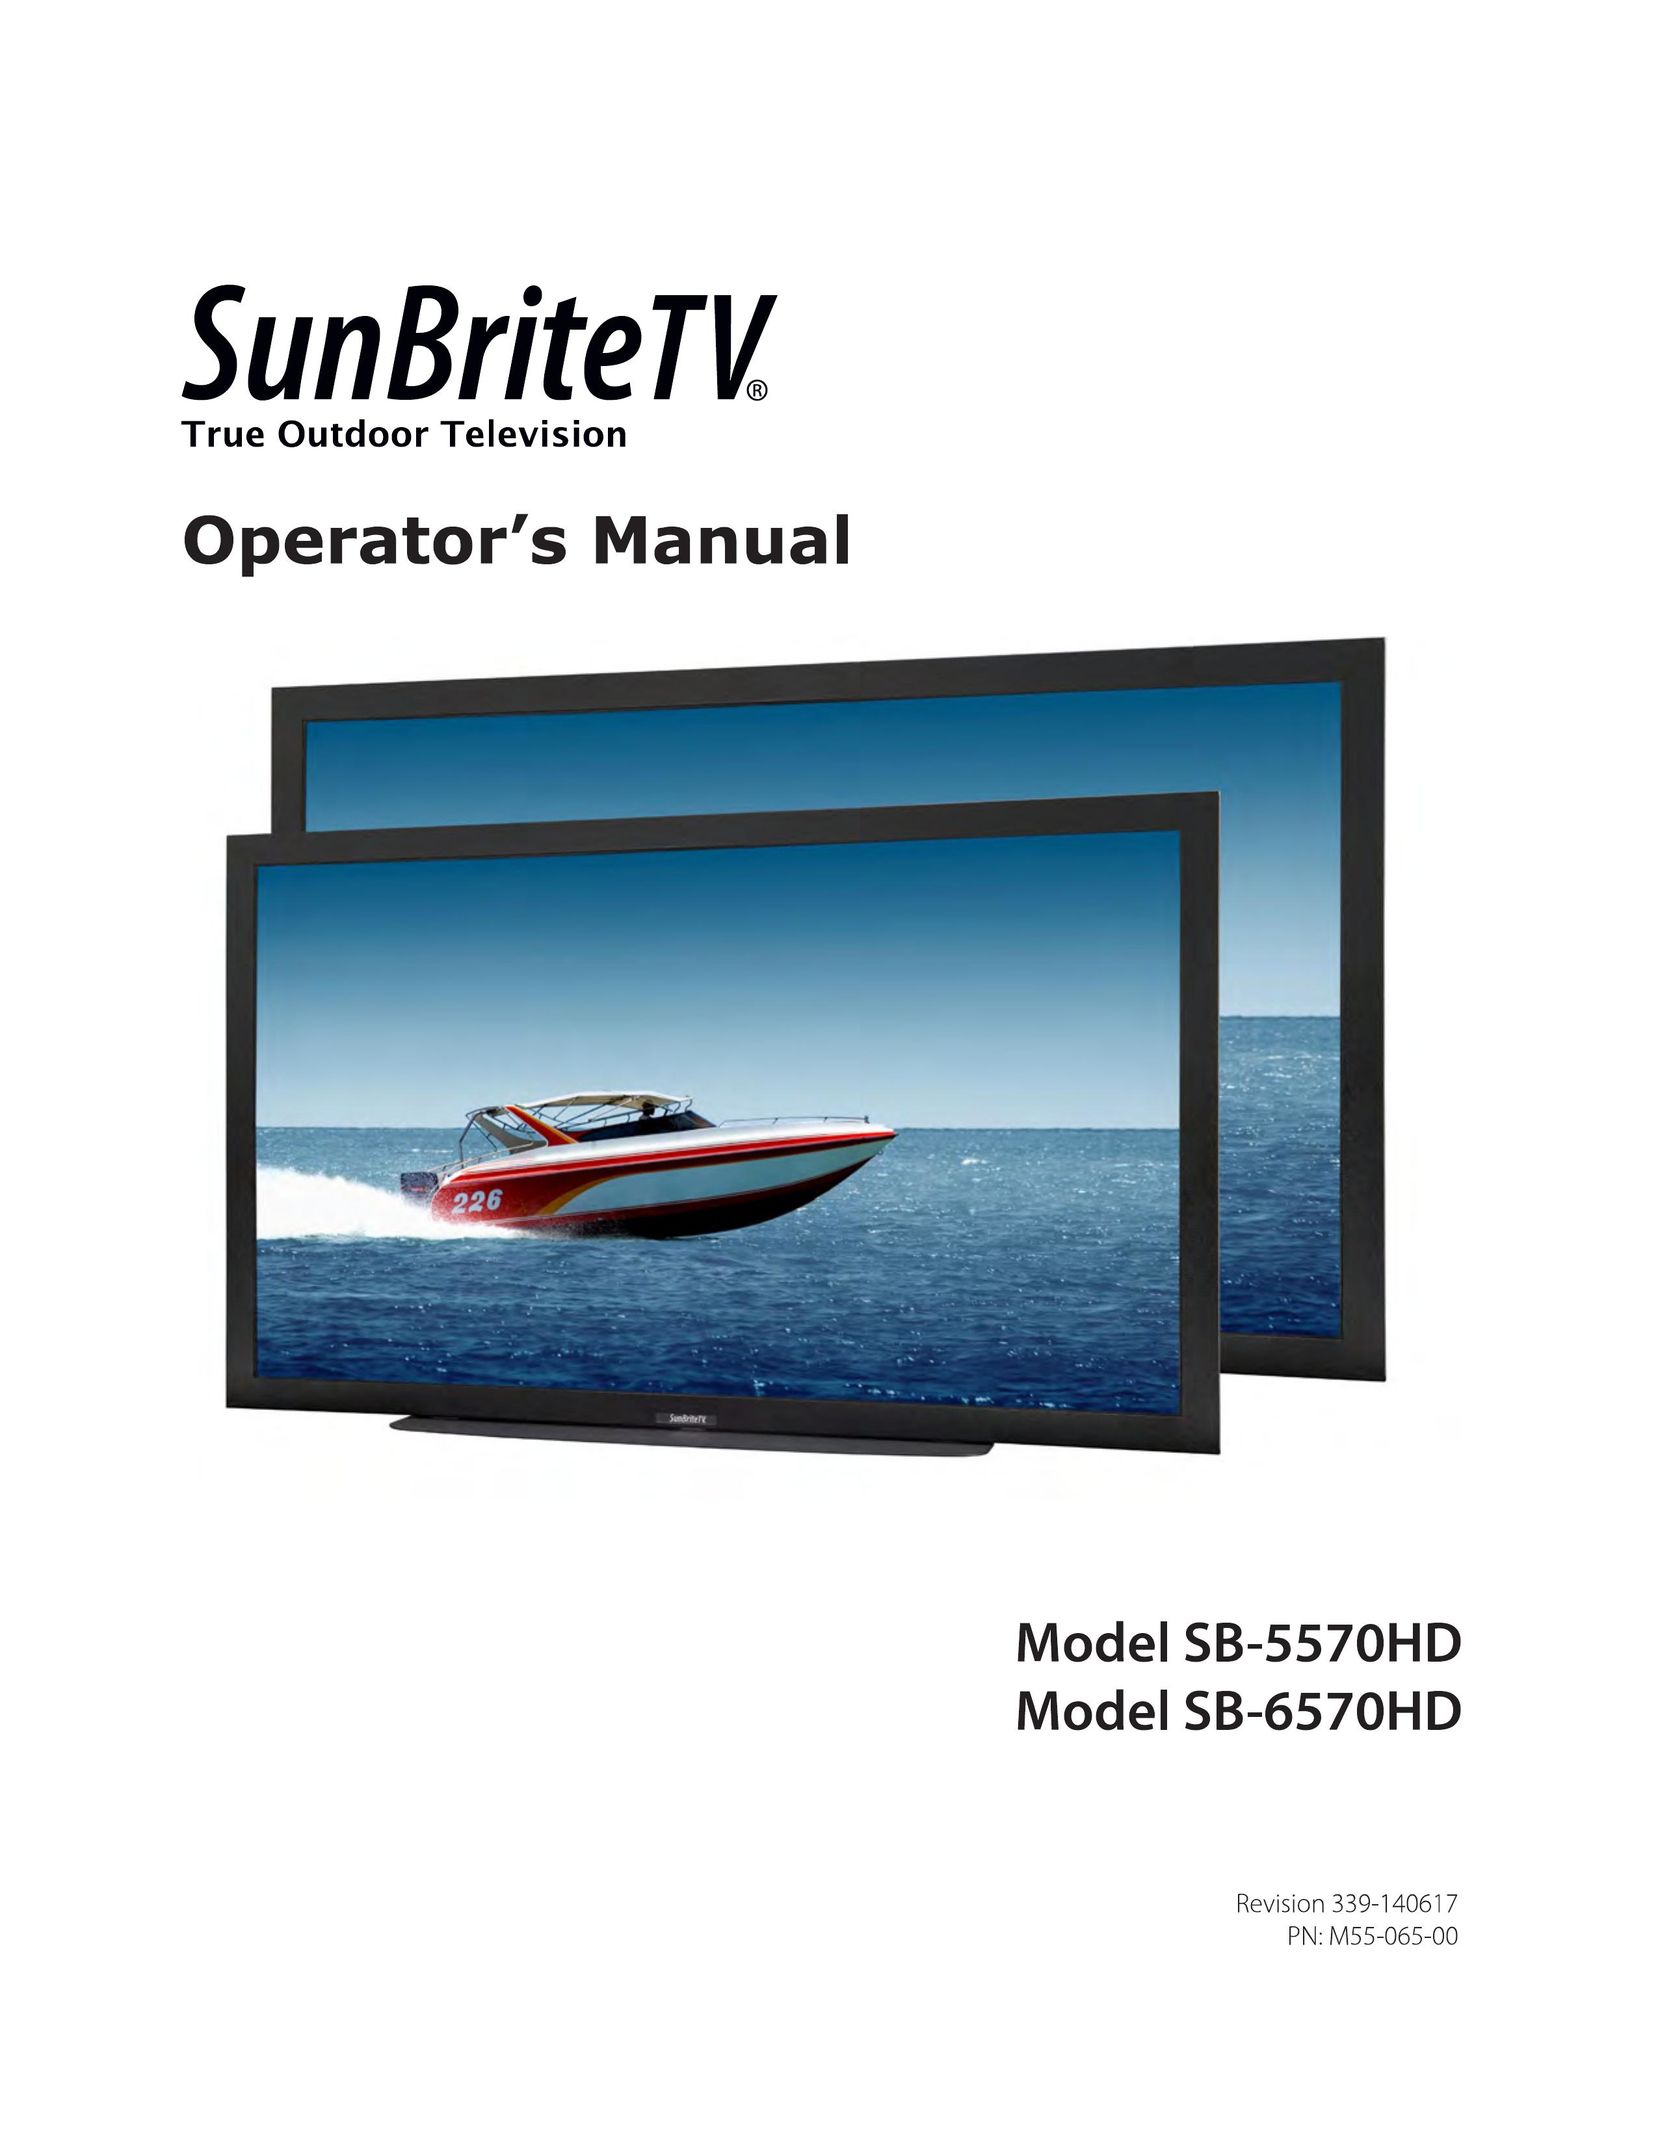 SunBriteTV SB-6570HD Car Satellite TV System User Manual